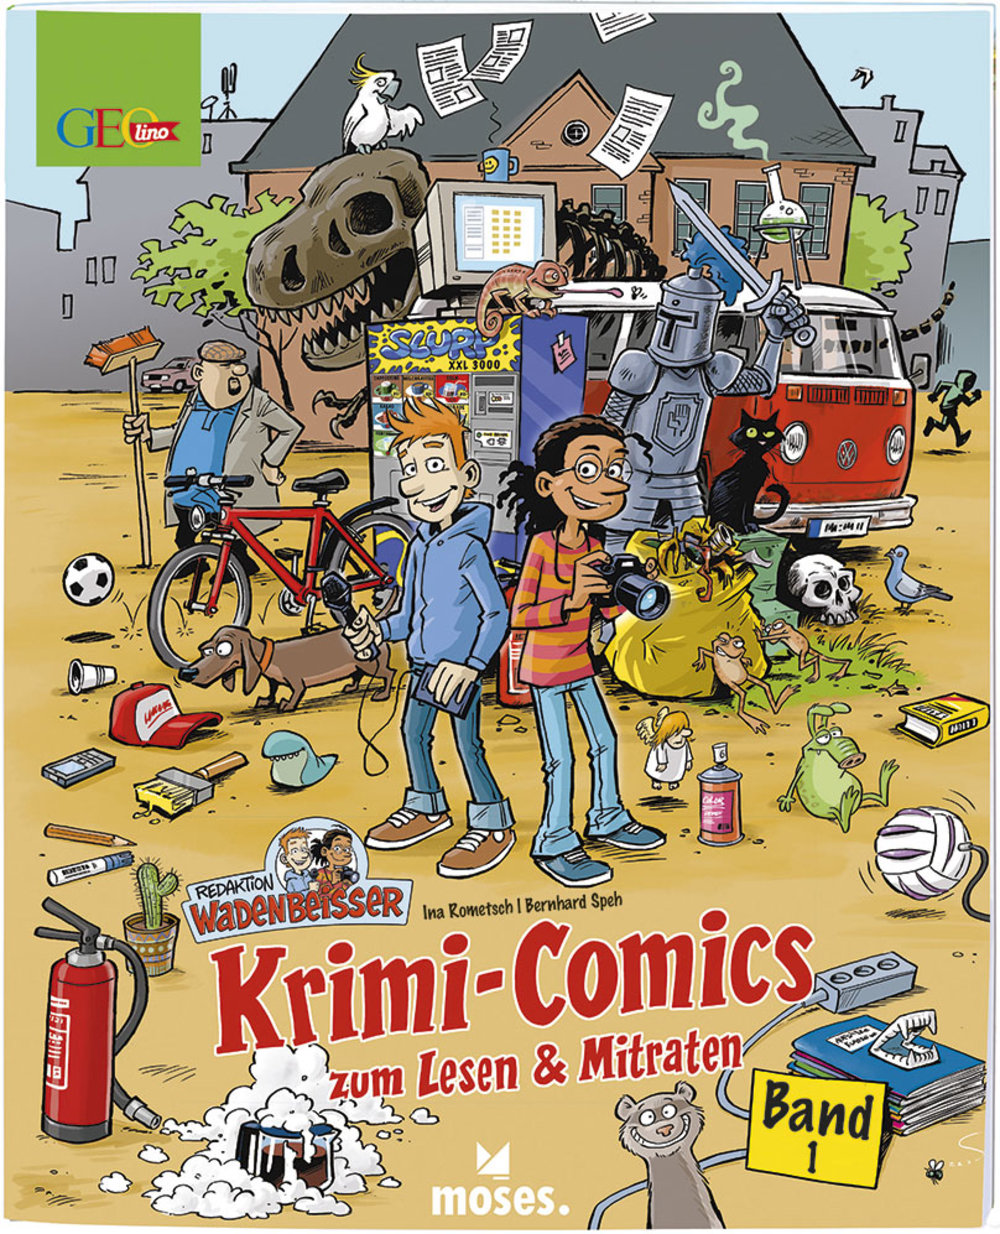 Krimi-Comics "Wadenbeißer" Band 1